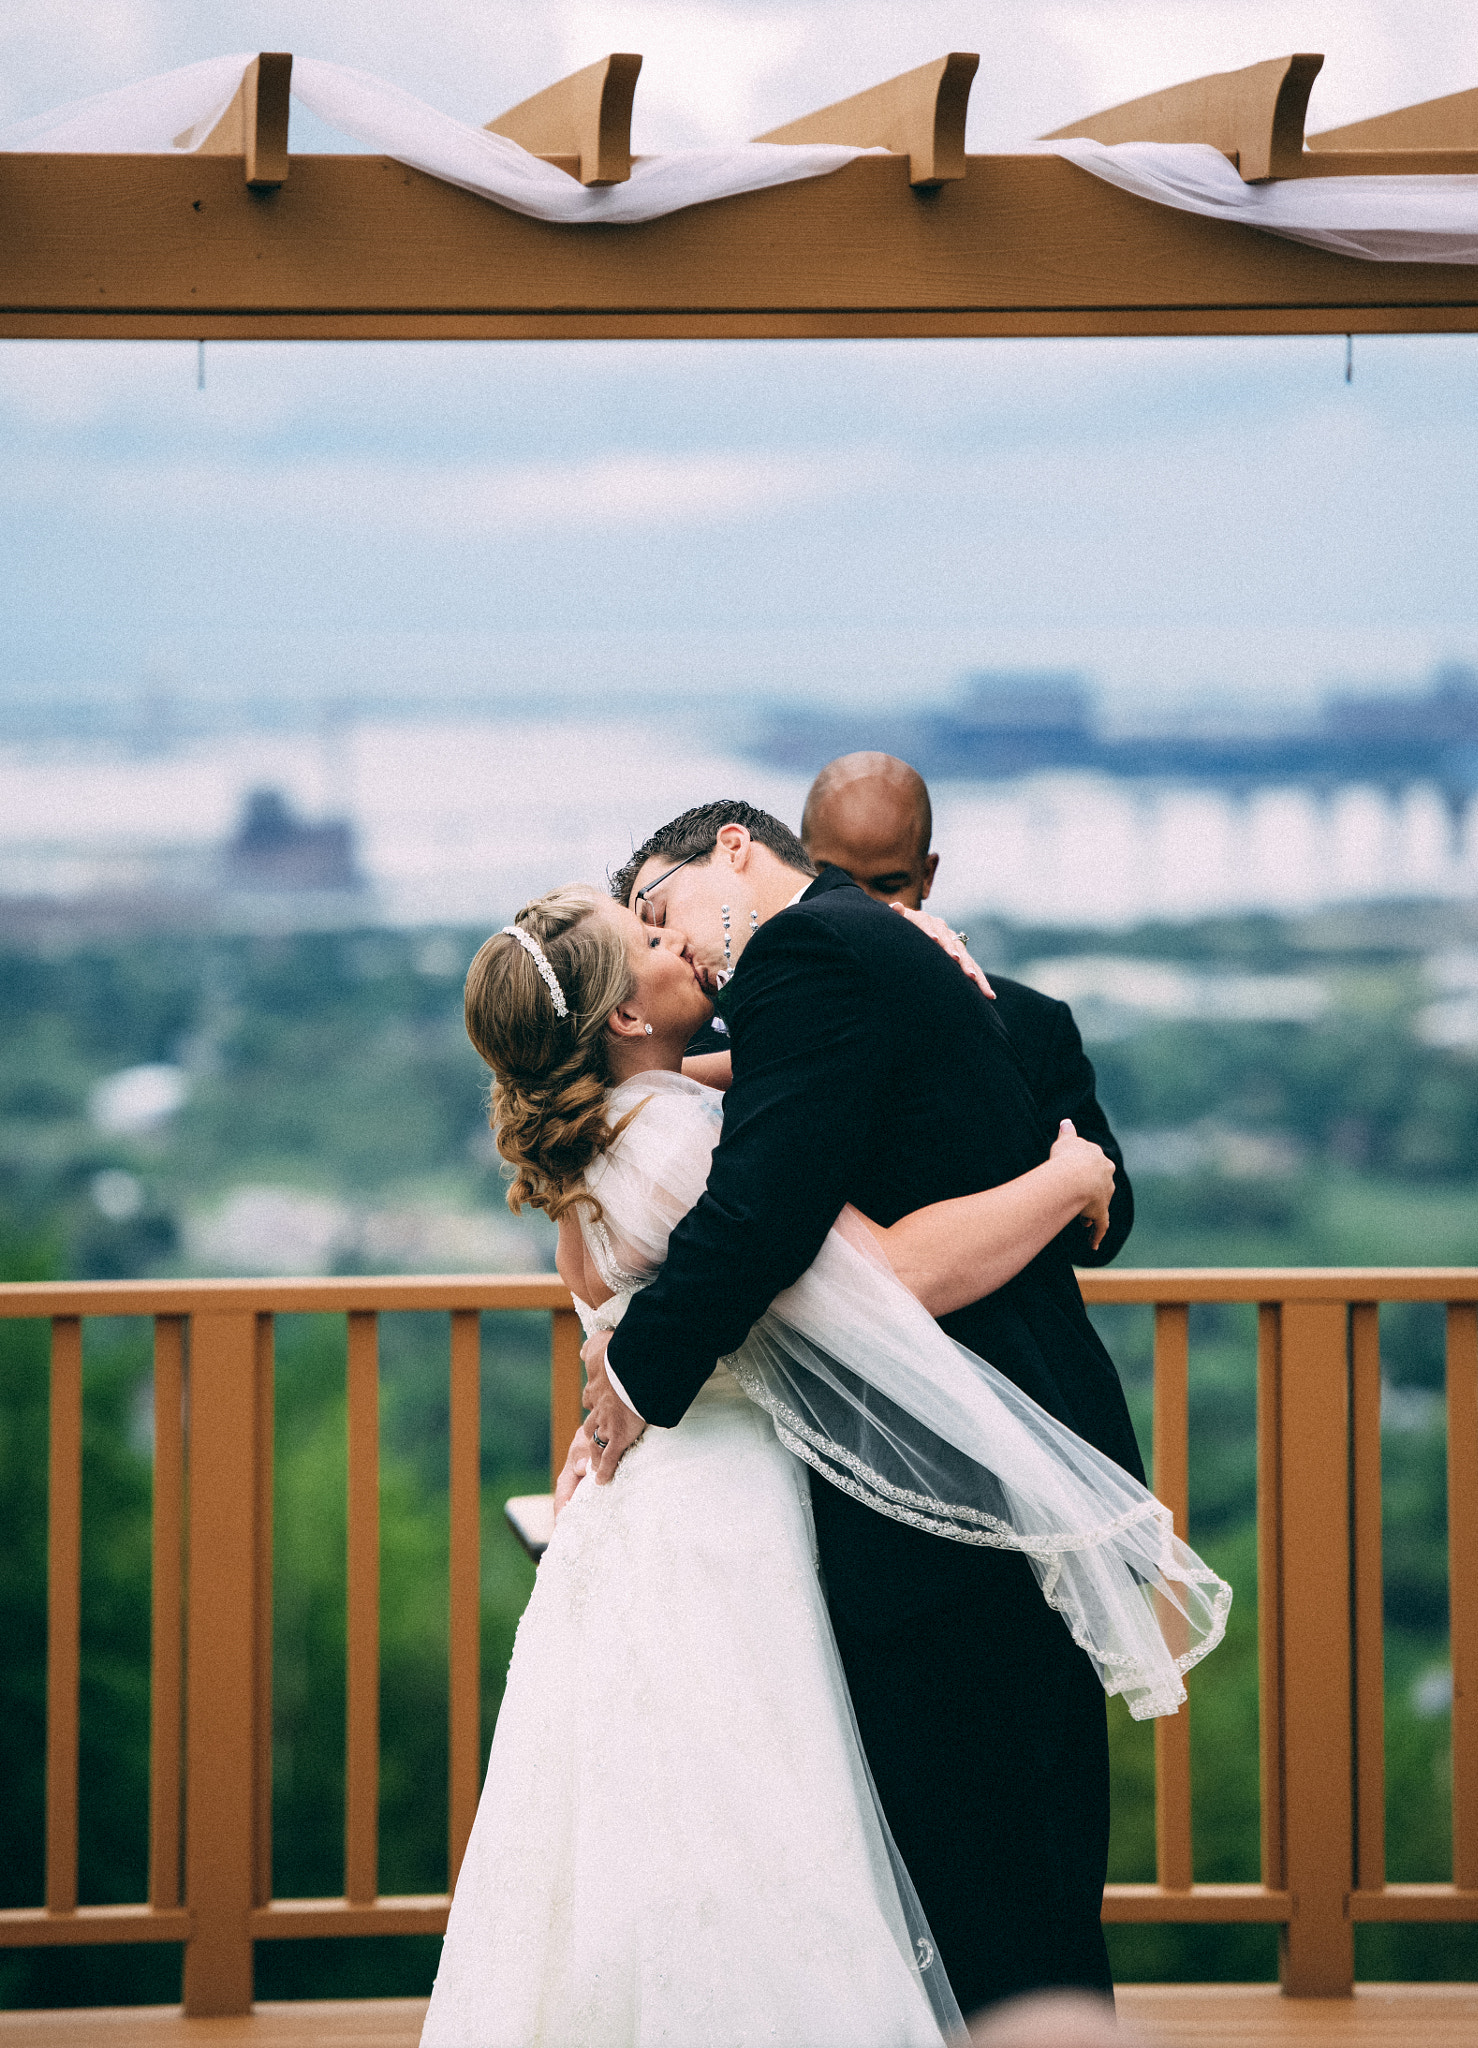 Nikon Df sample photo. Wedding kiss photography